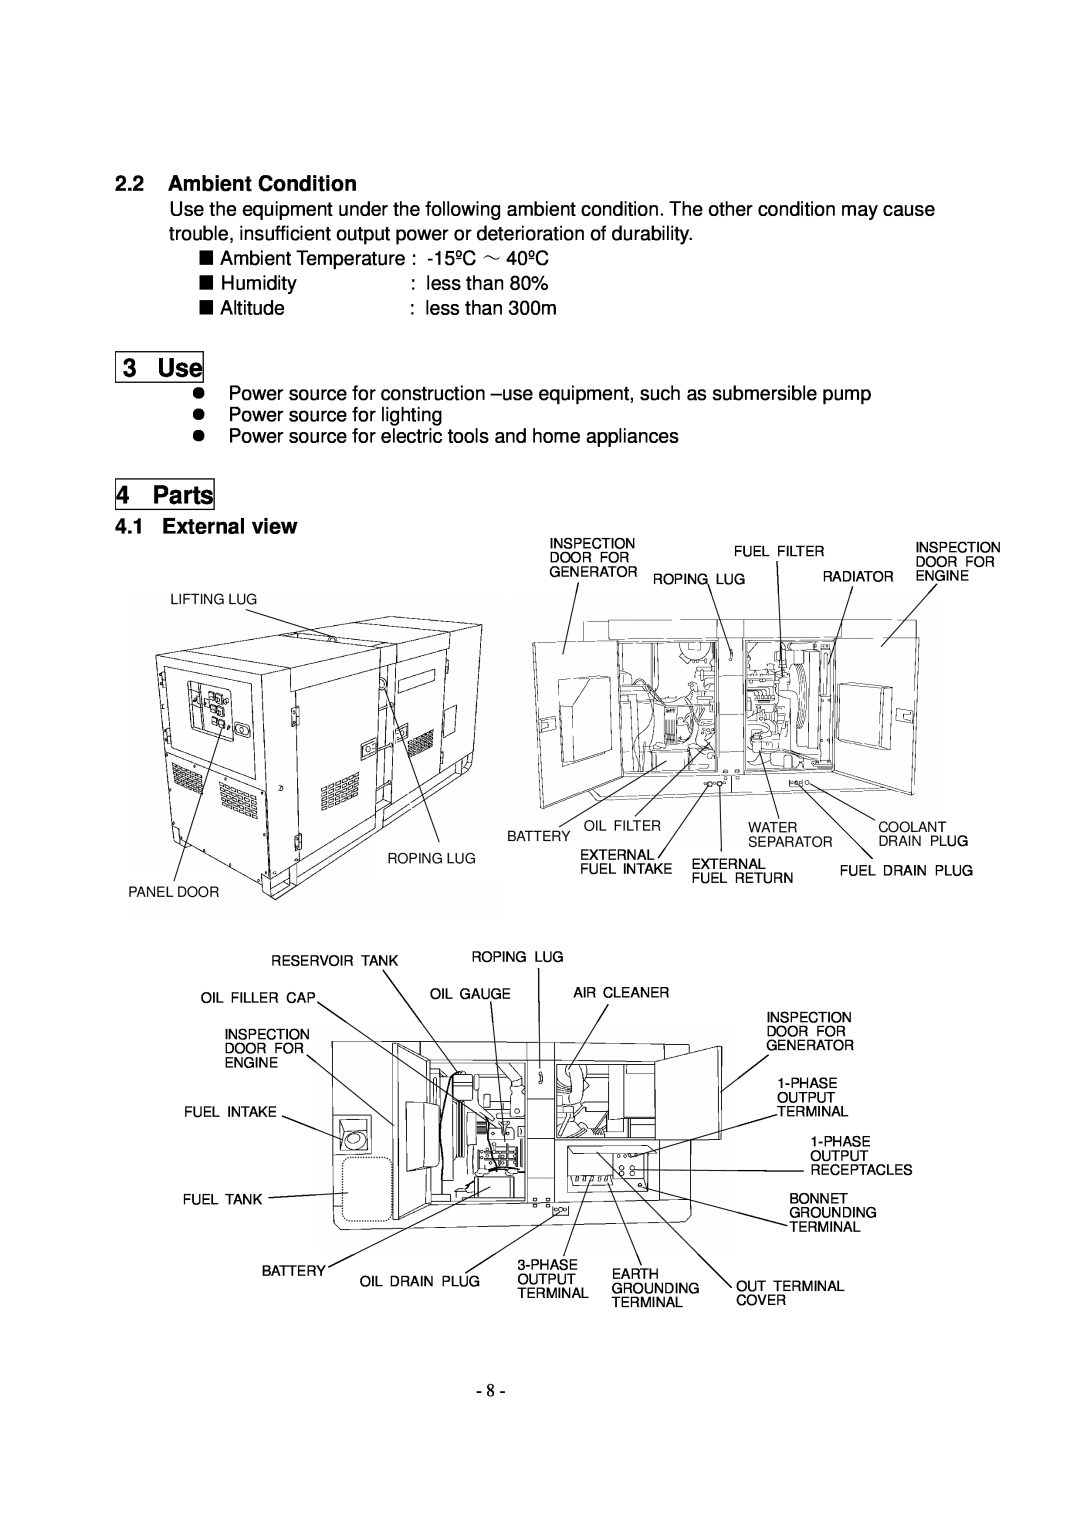 Shindaiwa DG1000MI manual 3 Use, Parts, Ambient Condition, External view 